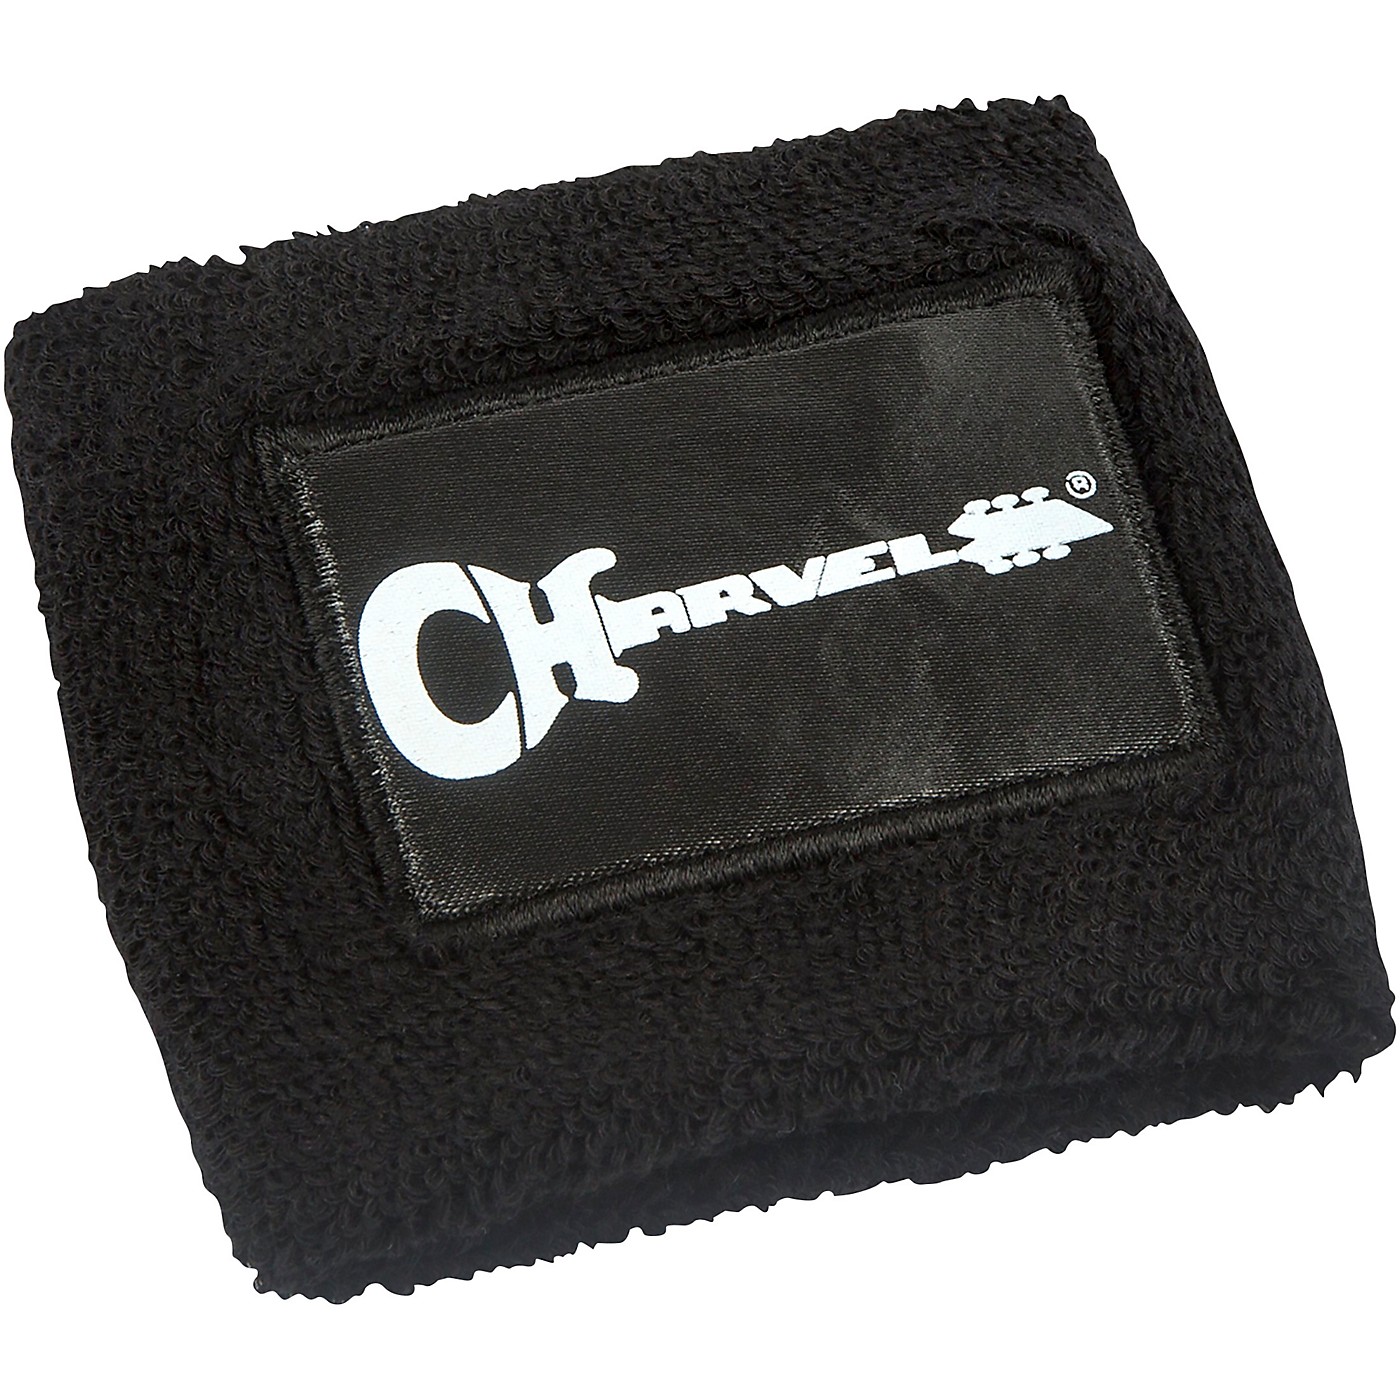 Charvel Logo Wristband - Black thumbnail